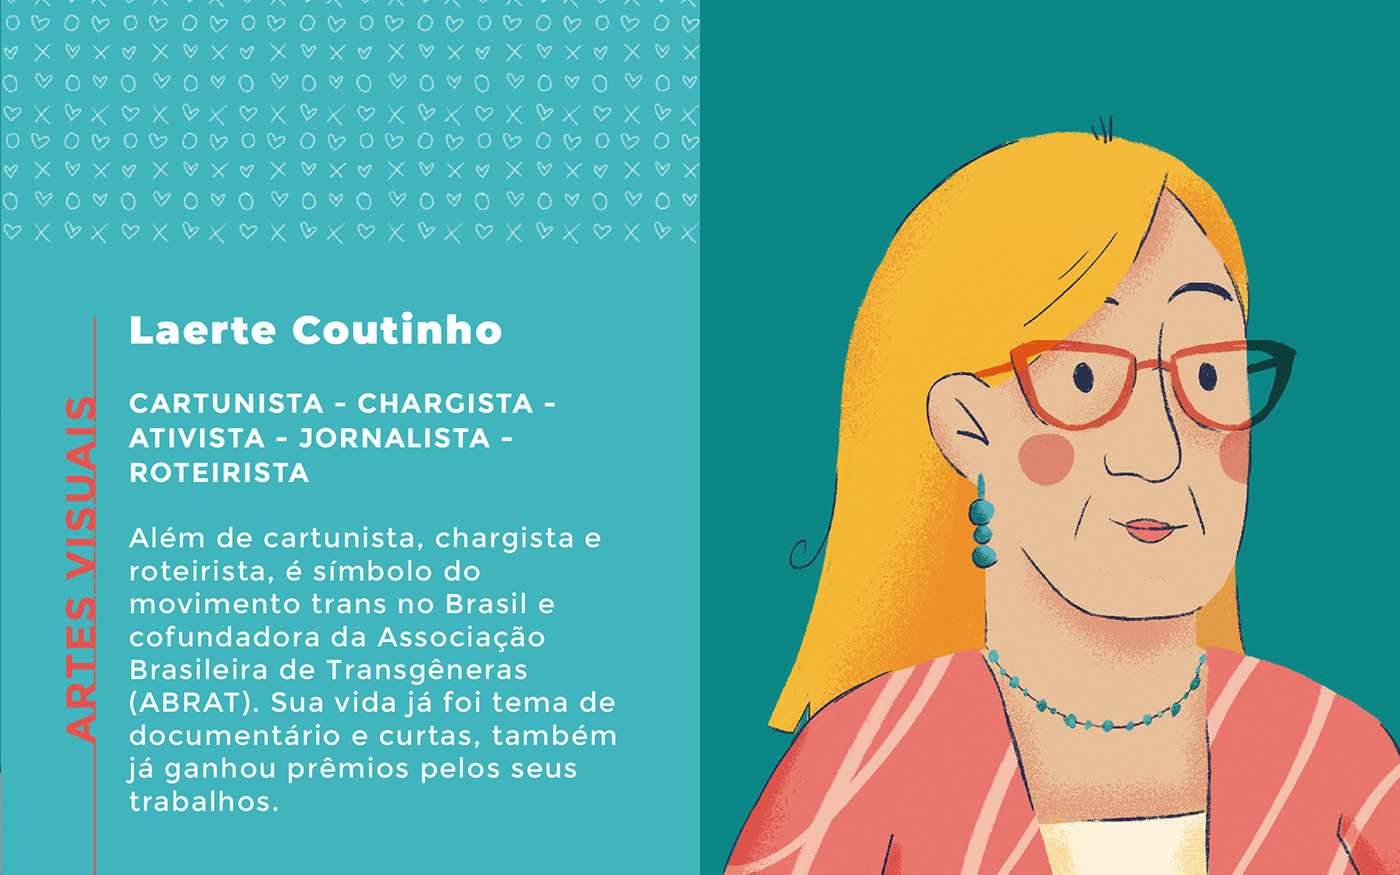 An illustrated portrait of Laerte Coutinho, a brazilian transgender political cartoonist.
